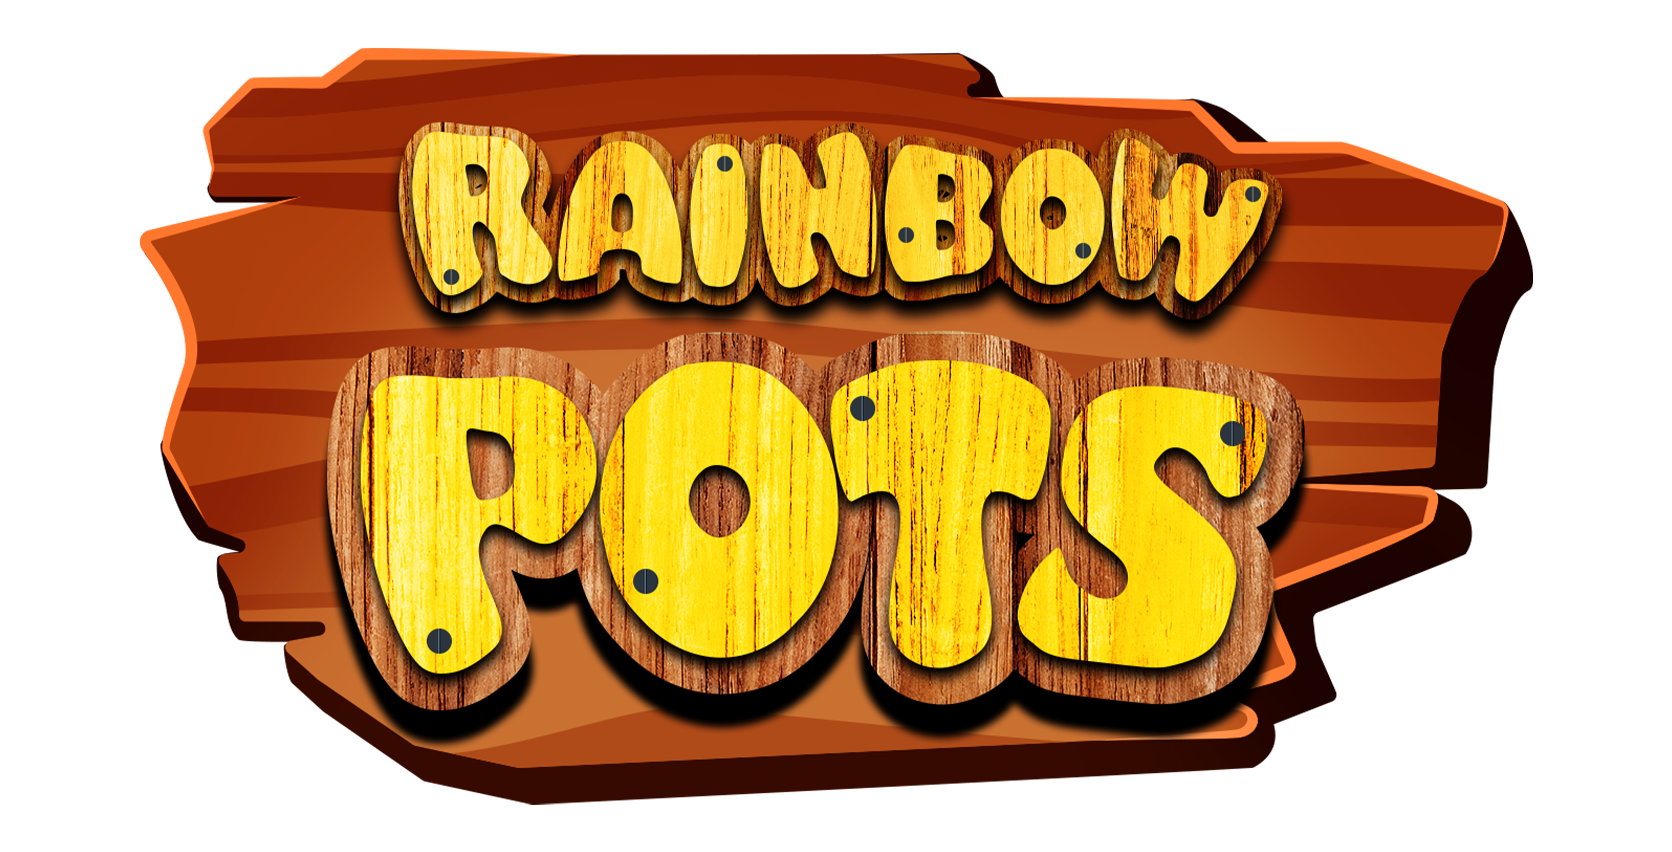 Rainbow Pots